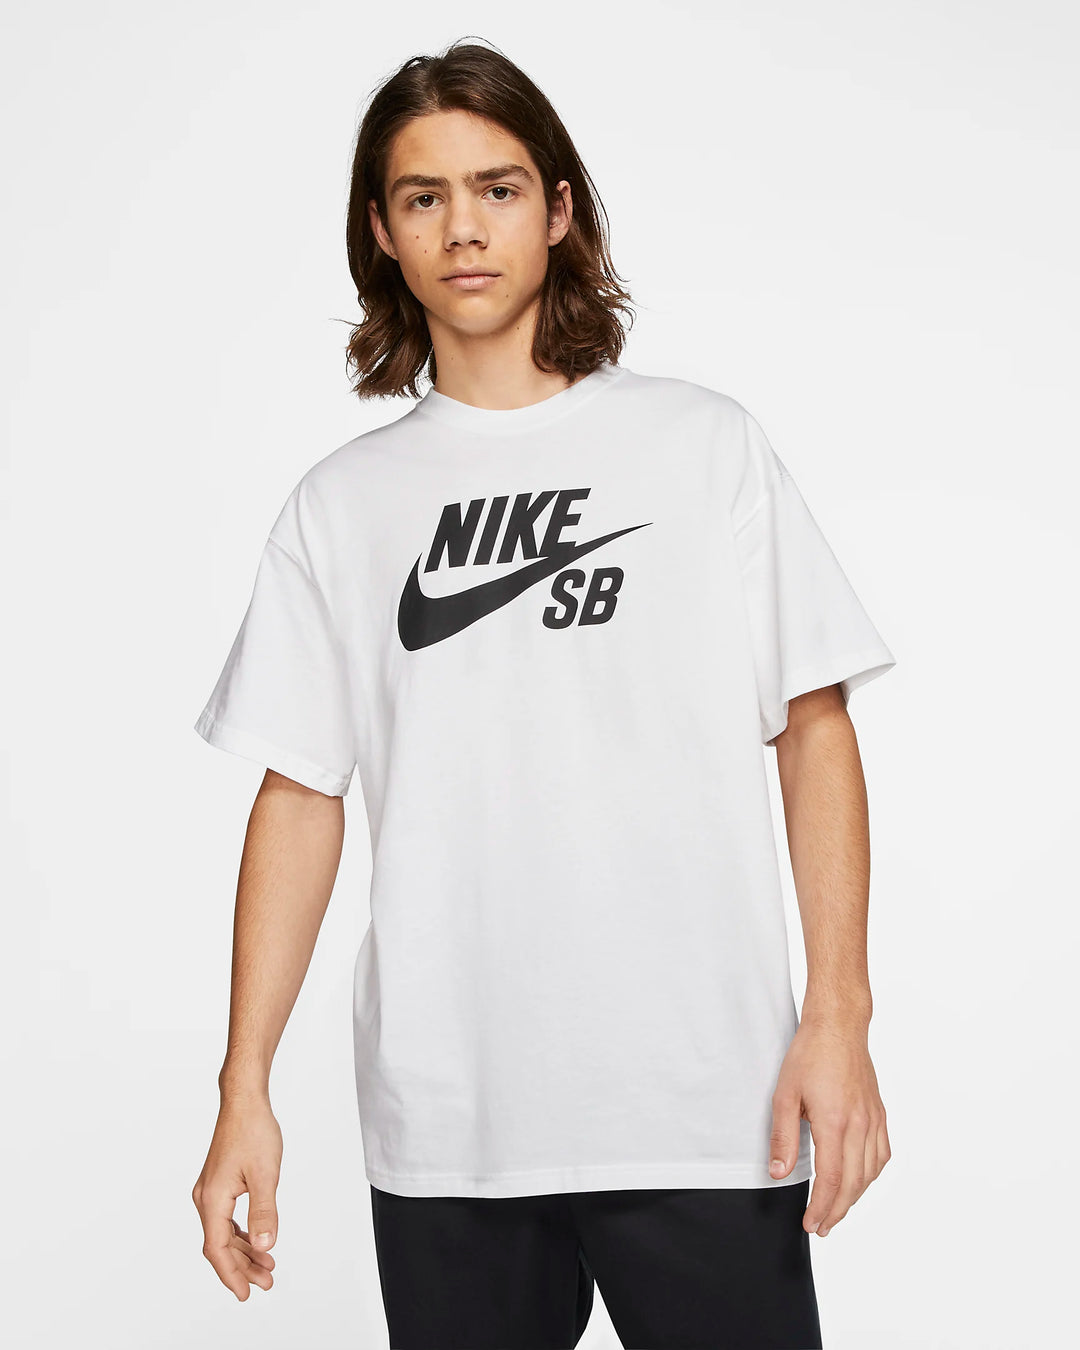 Nike SB Logo Skate T-Shirt - WHITE/ BLACK - Sun Diego Boardshop